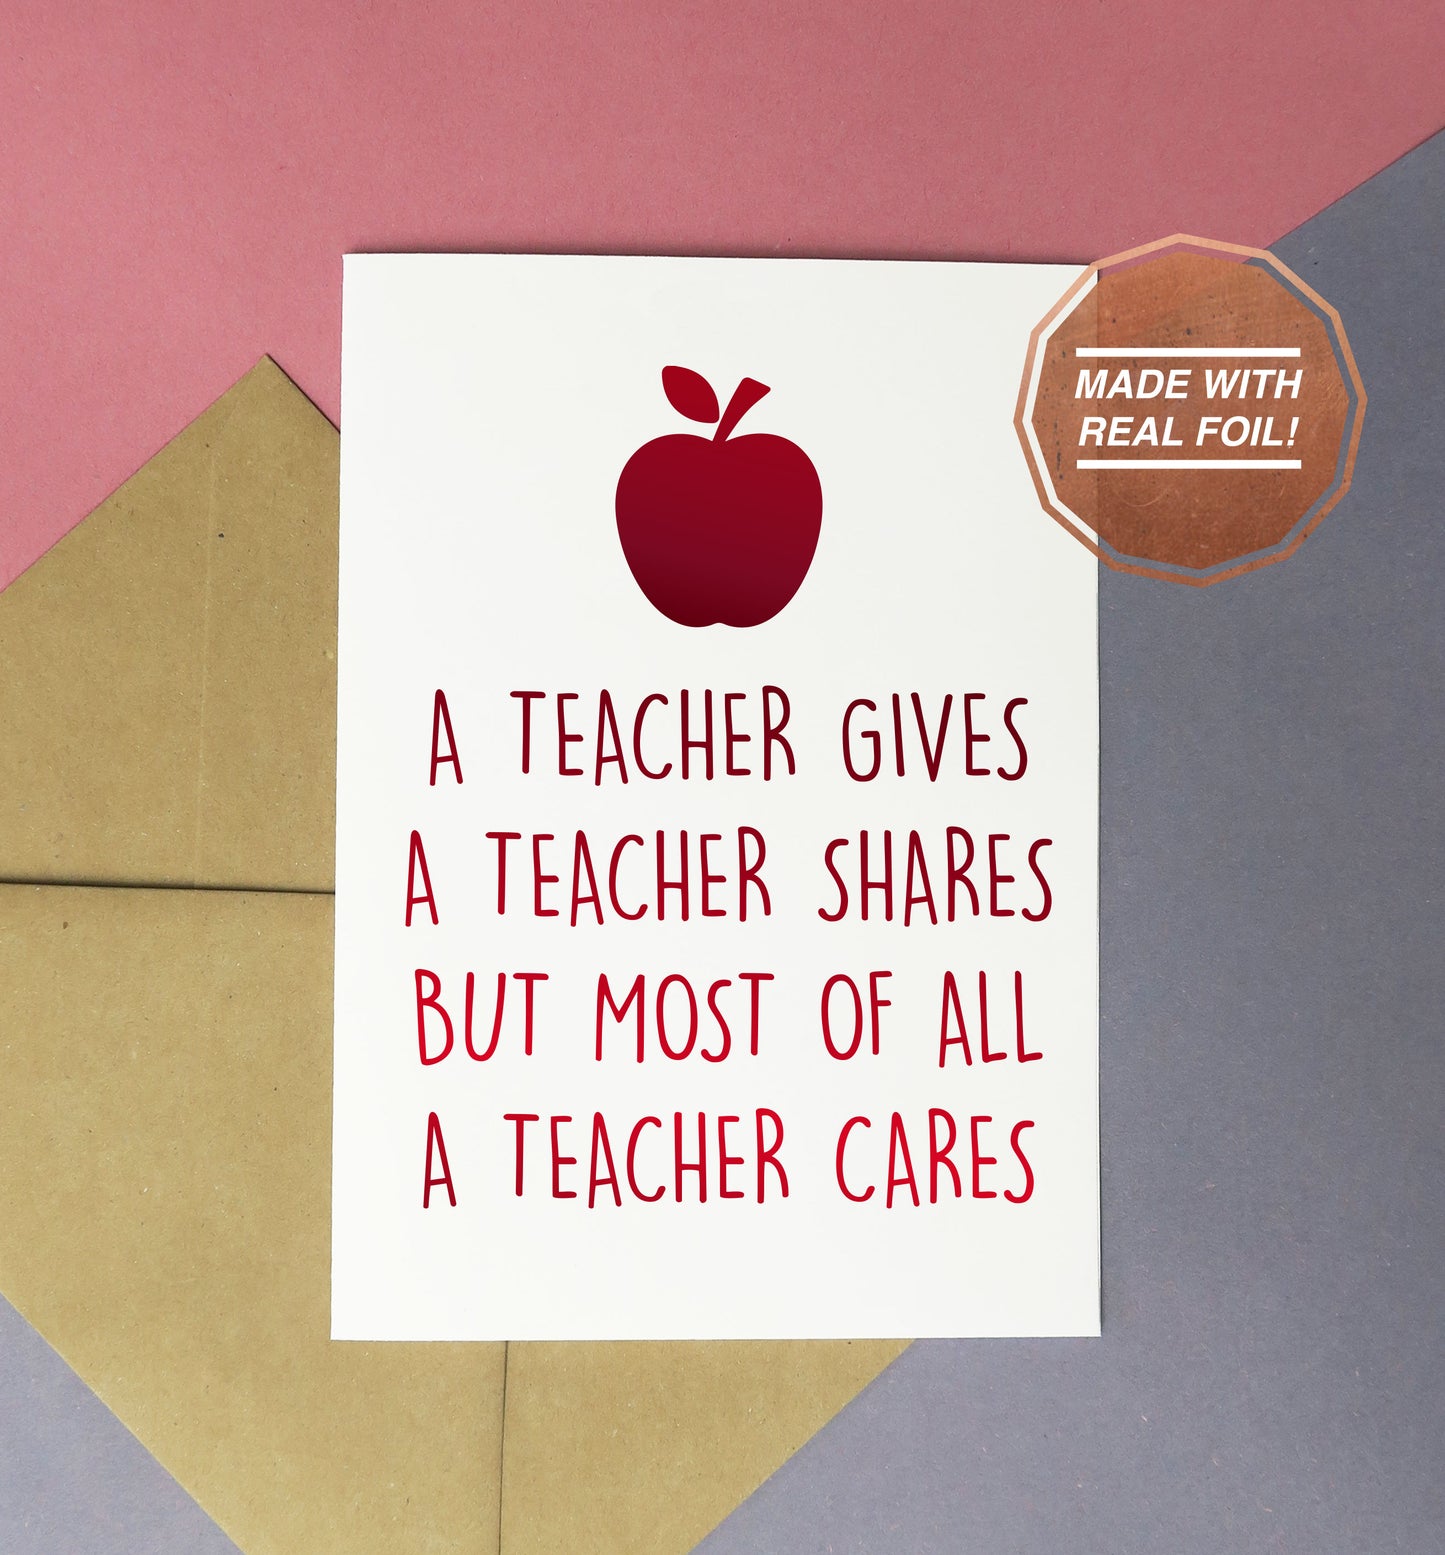 A teacher gives, a teacher shares but most of all a teacher cares handmade foiled greeting card